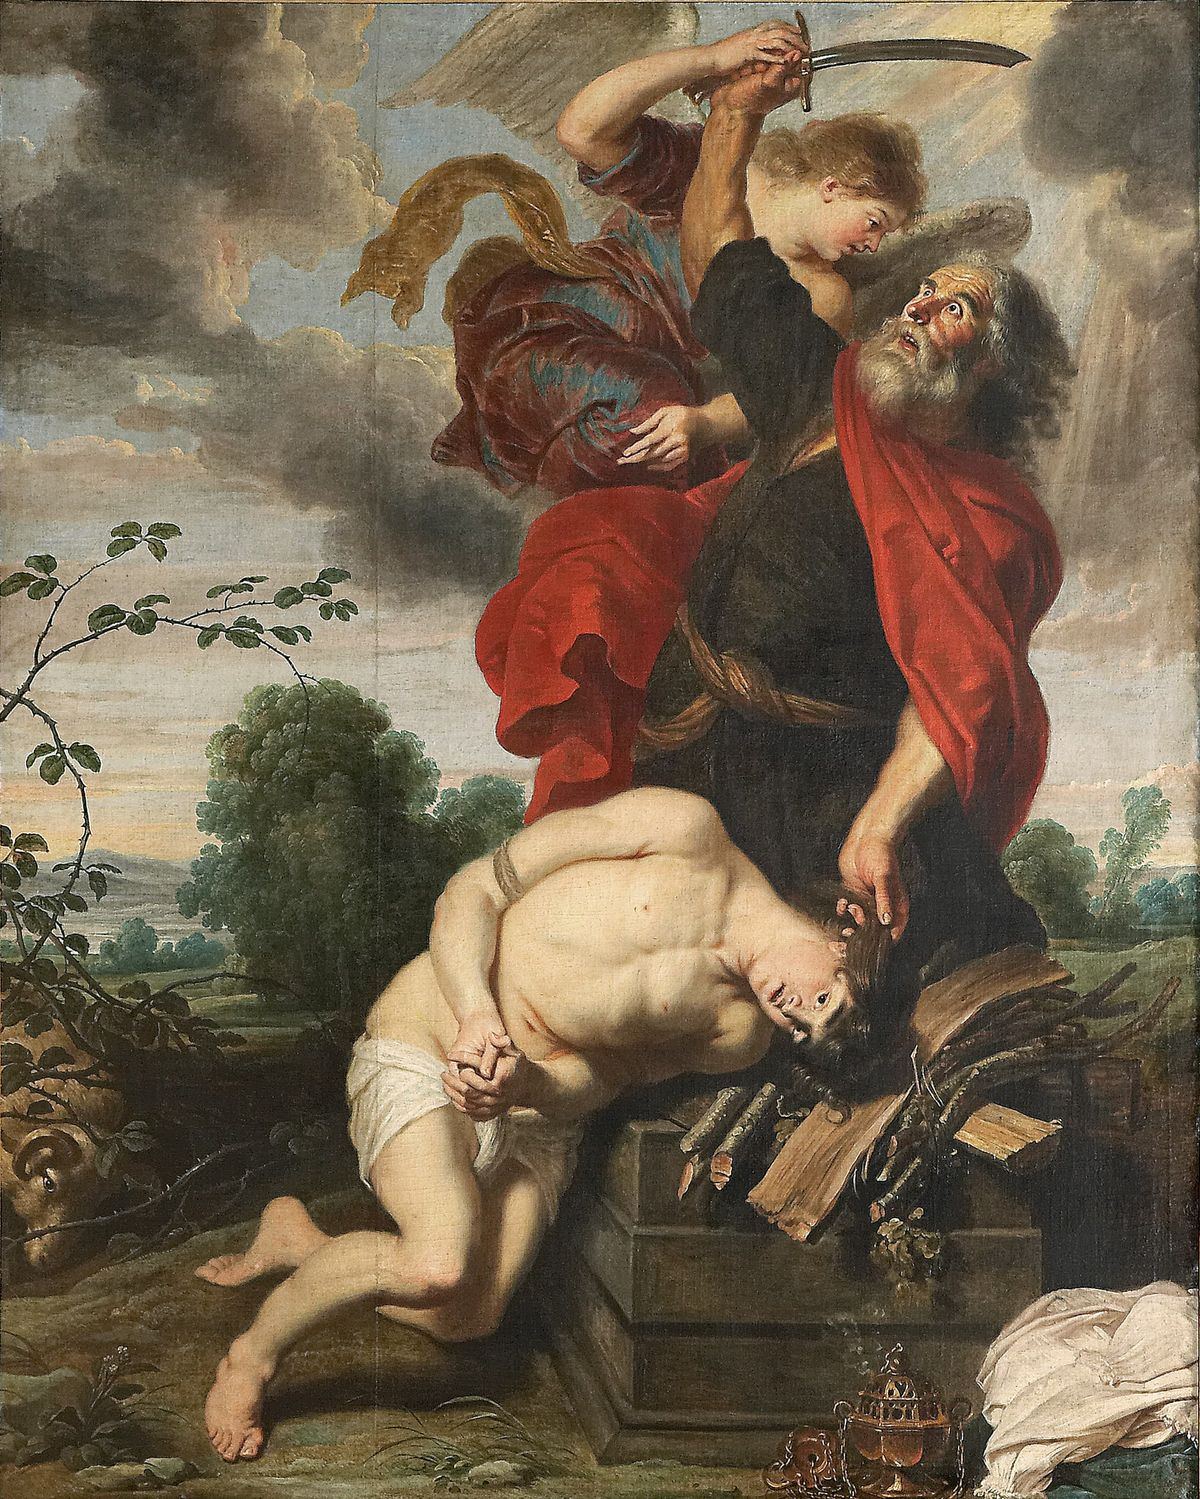 The Sacrifice of Abraham (ca. 1631 - 1635) by Cornelis de Vos and Jan Wildens - Public Domain Catholic Painting